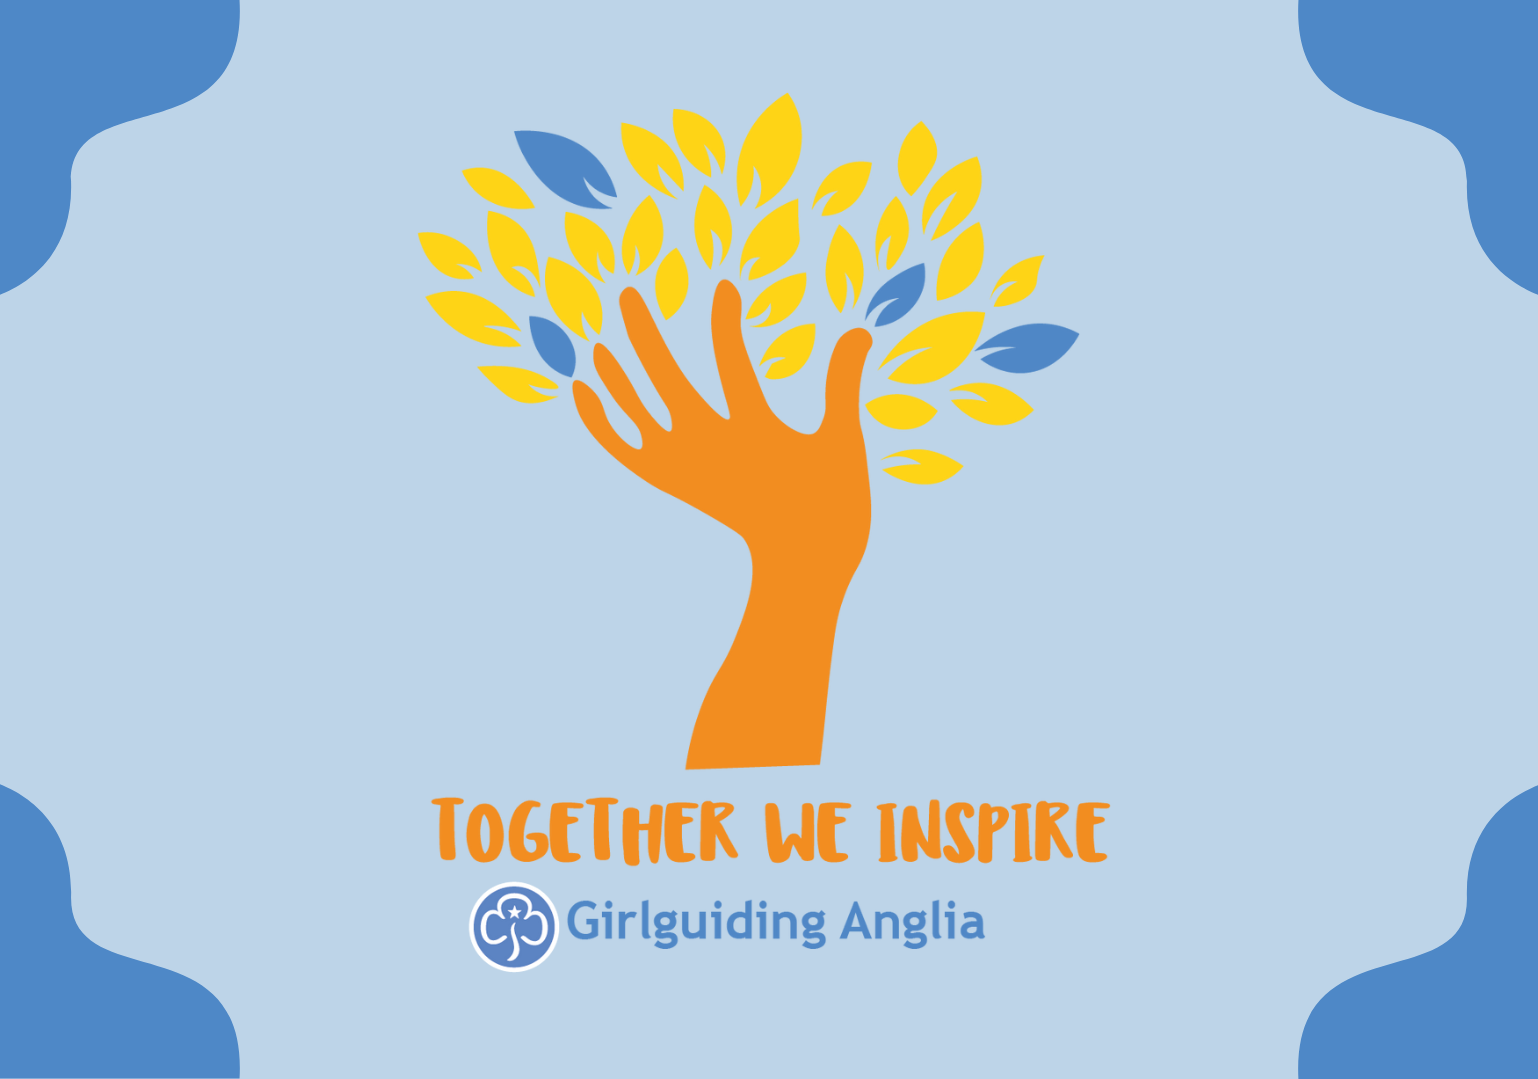 image relating to Girlguiding Anglia Strategy 2021-2026